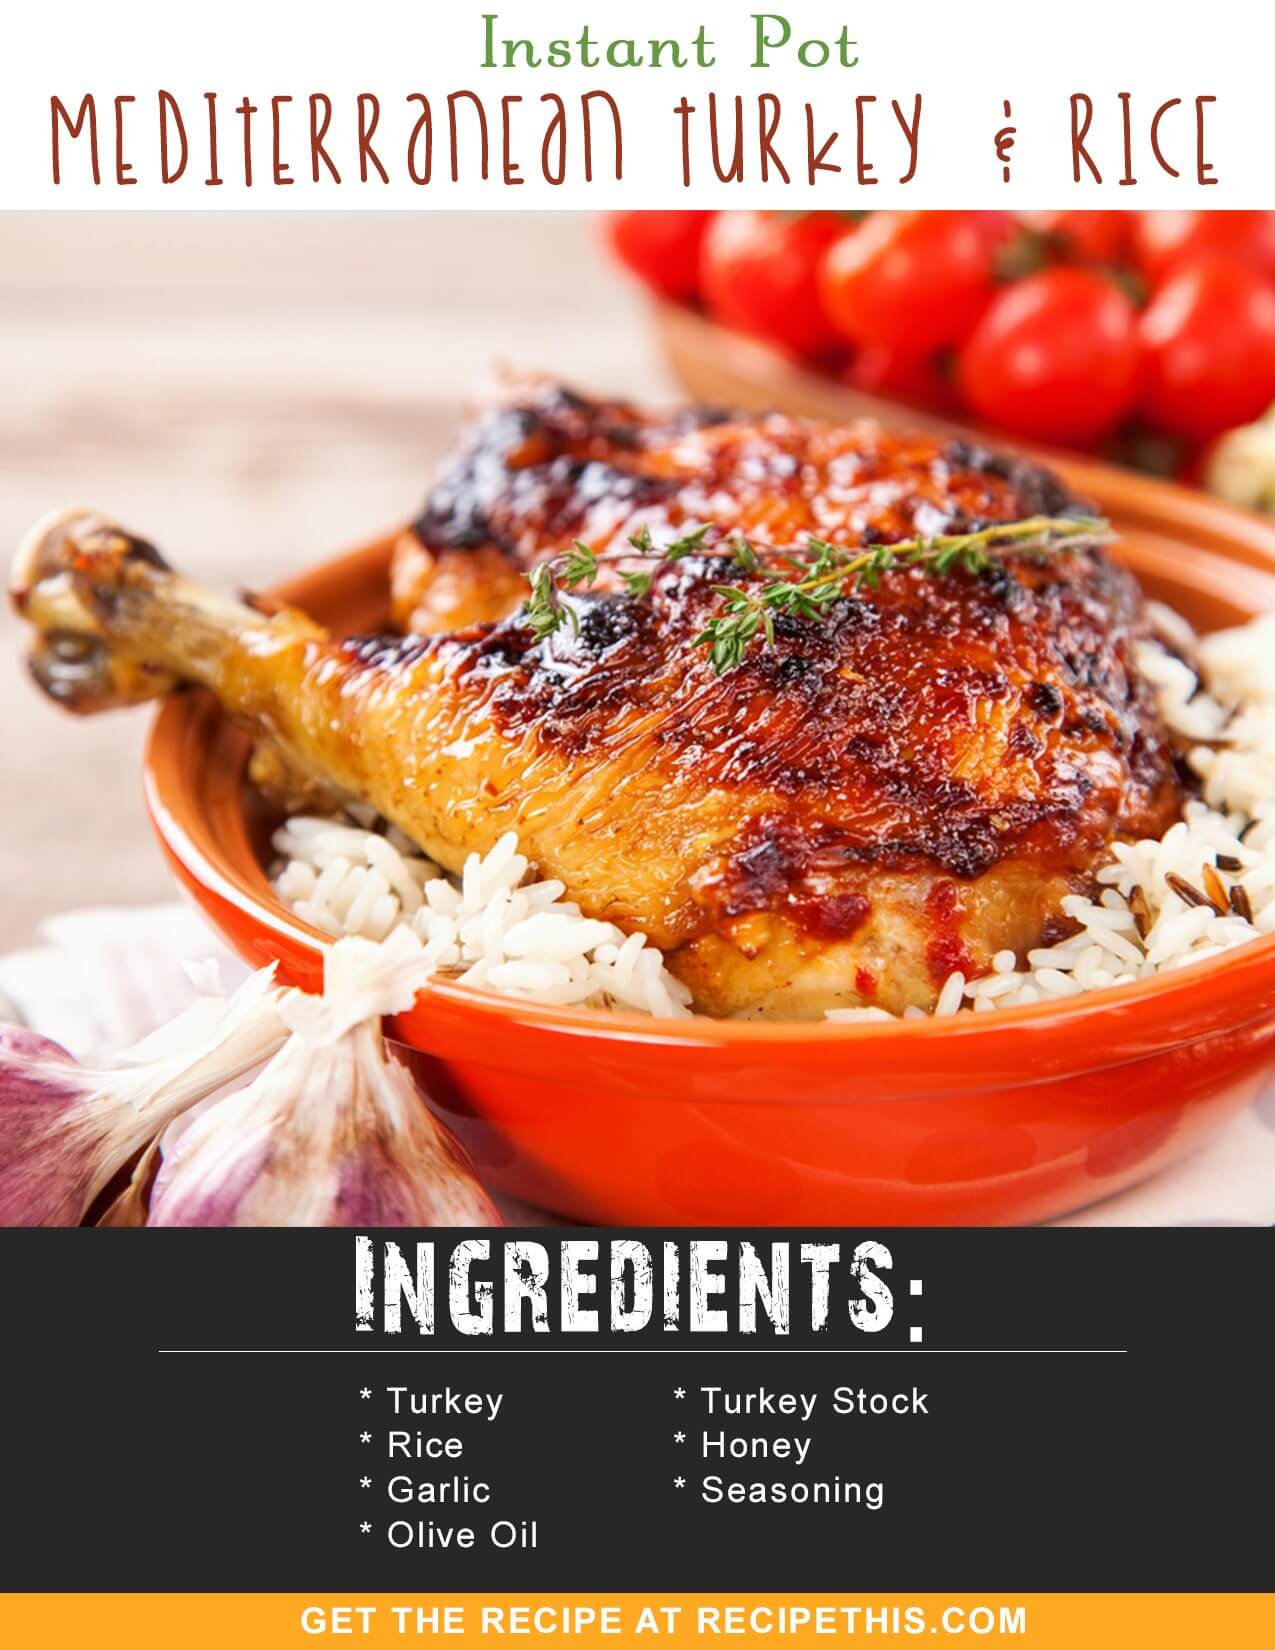 Instant Pot Recipes | Instant Pot Mediterranean Turkey & Rice Dutch Oven Baked Turkey & Spaghetti recipe from RecipeThis.com